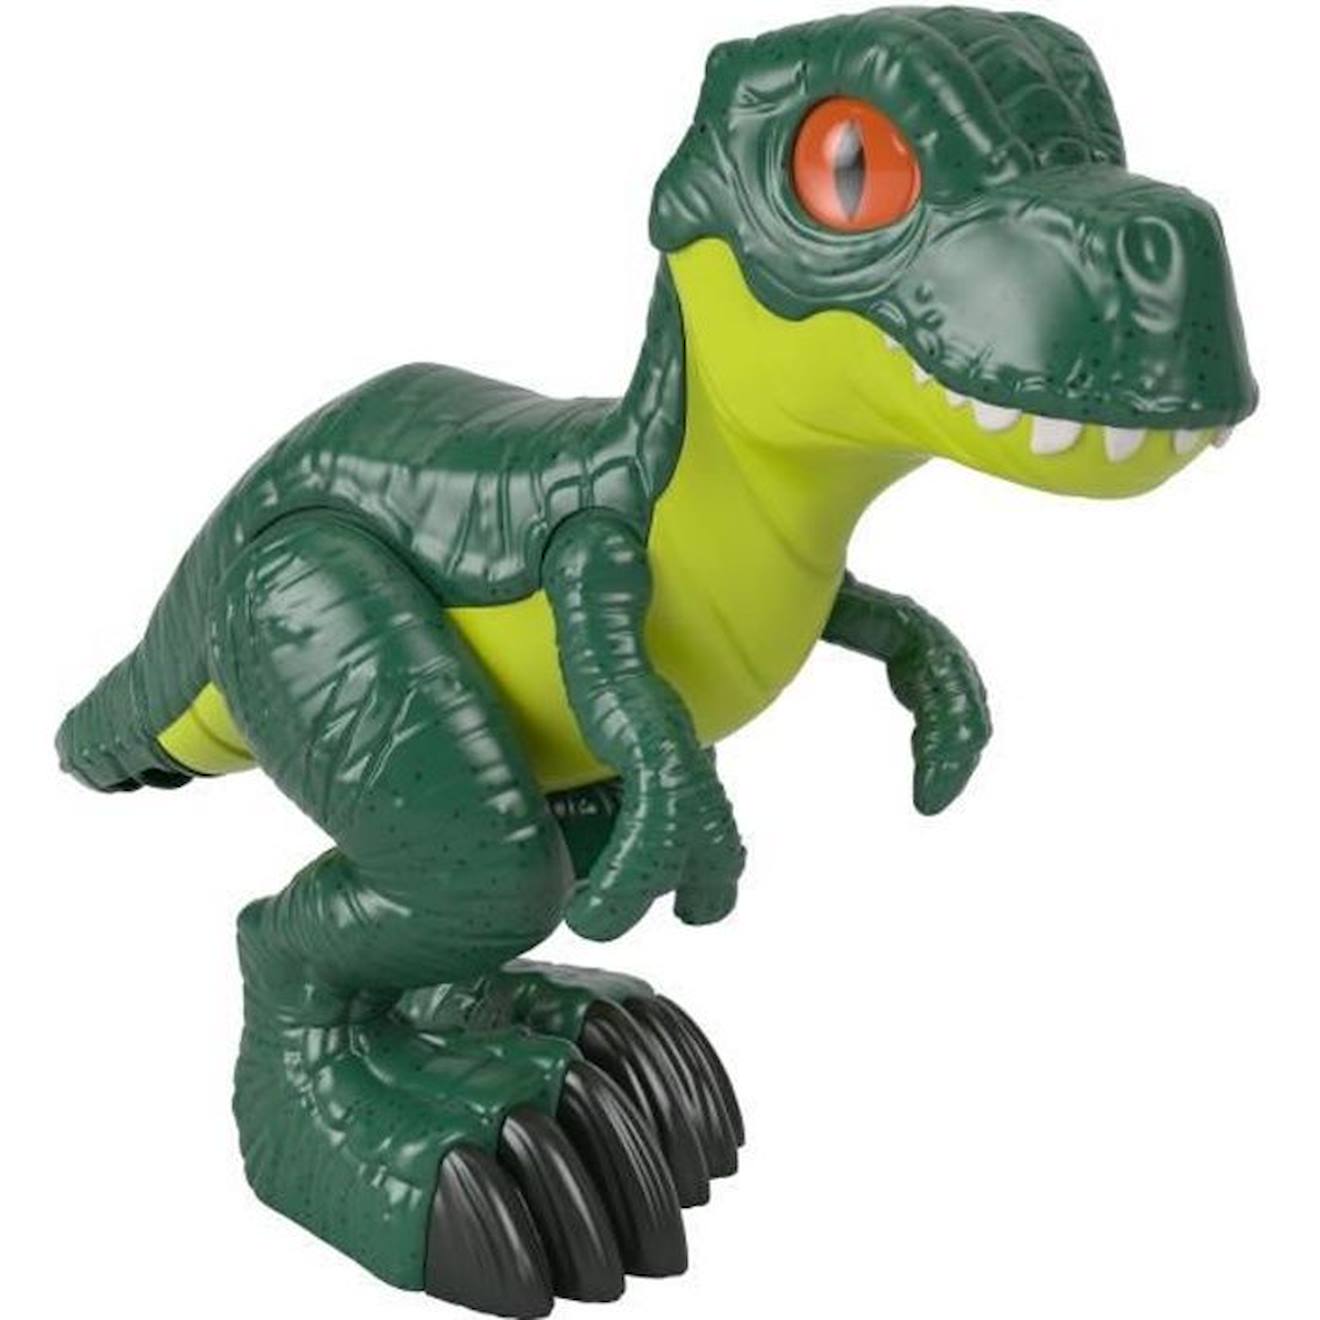 Figurine Dinosaure - Fisher Price - T-rex Xl Imaginext Jurassic World - Pattes Articulées - Mixte Ve